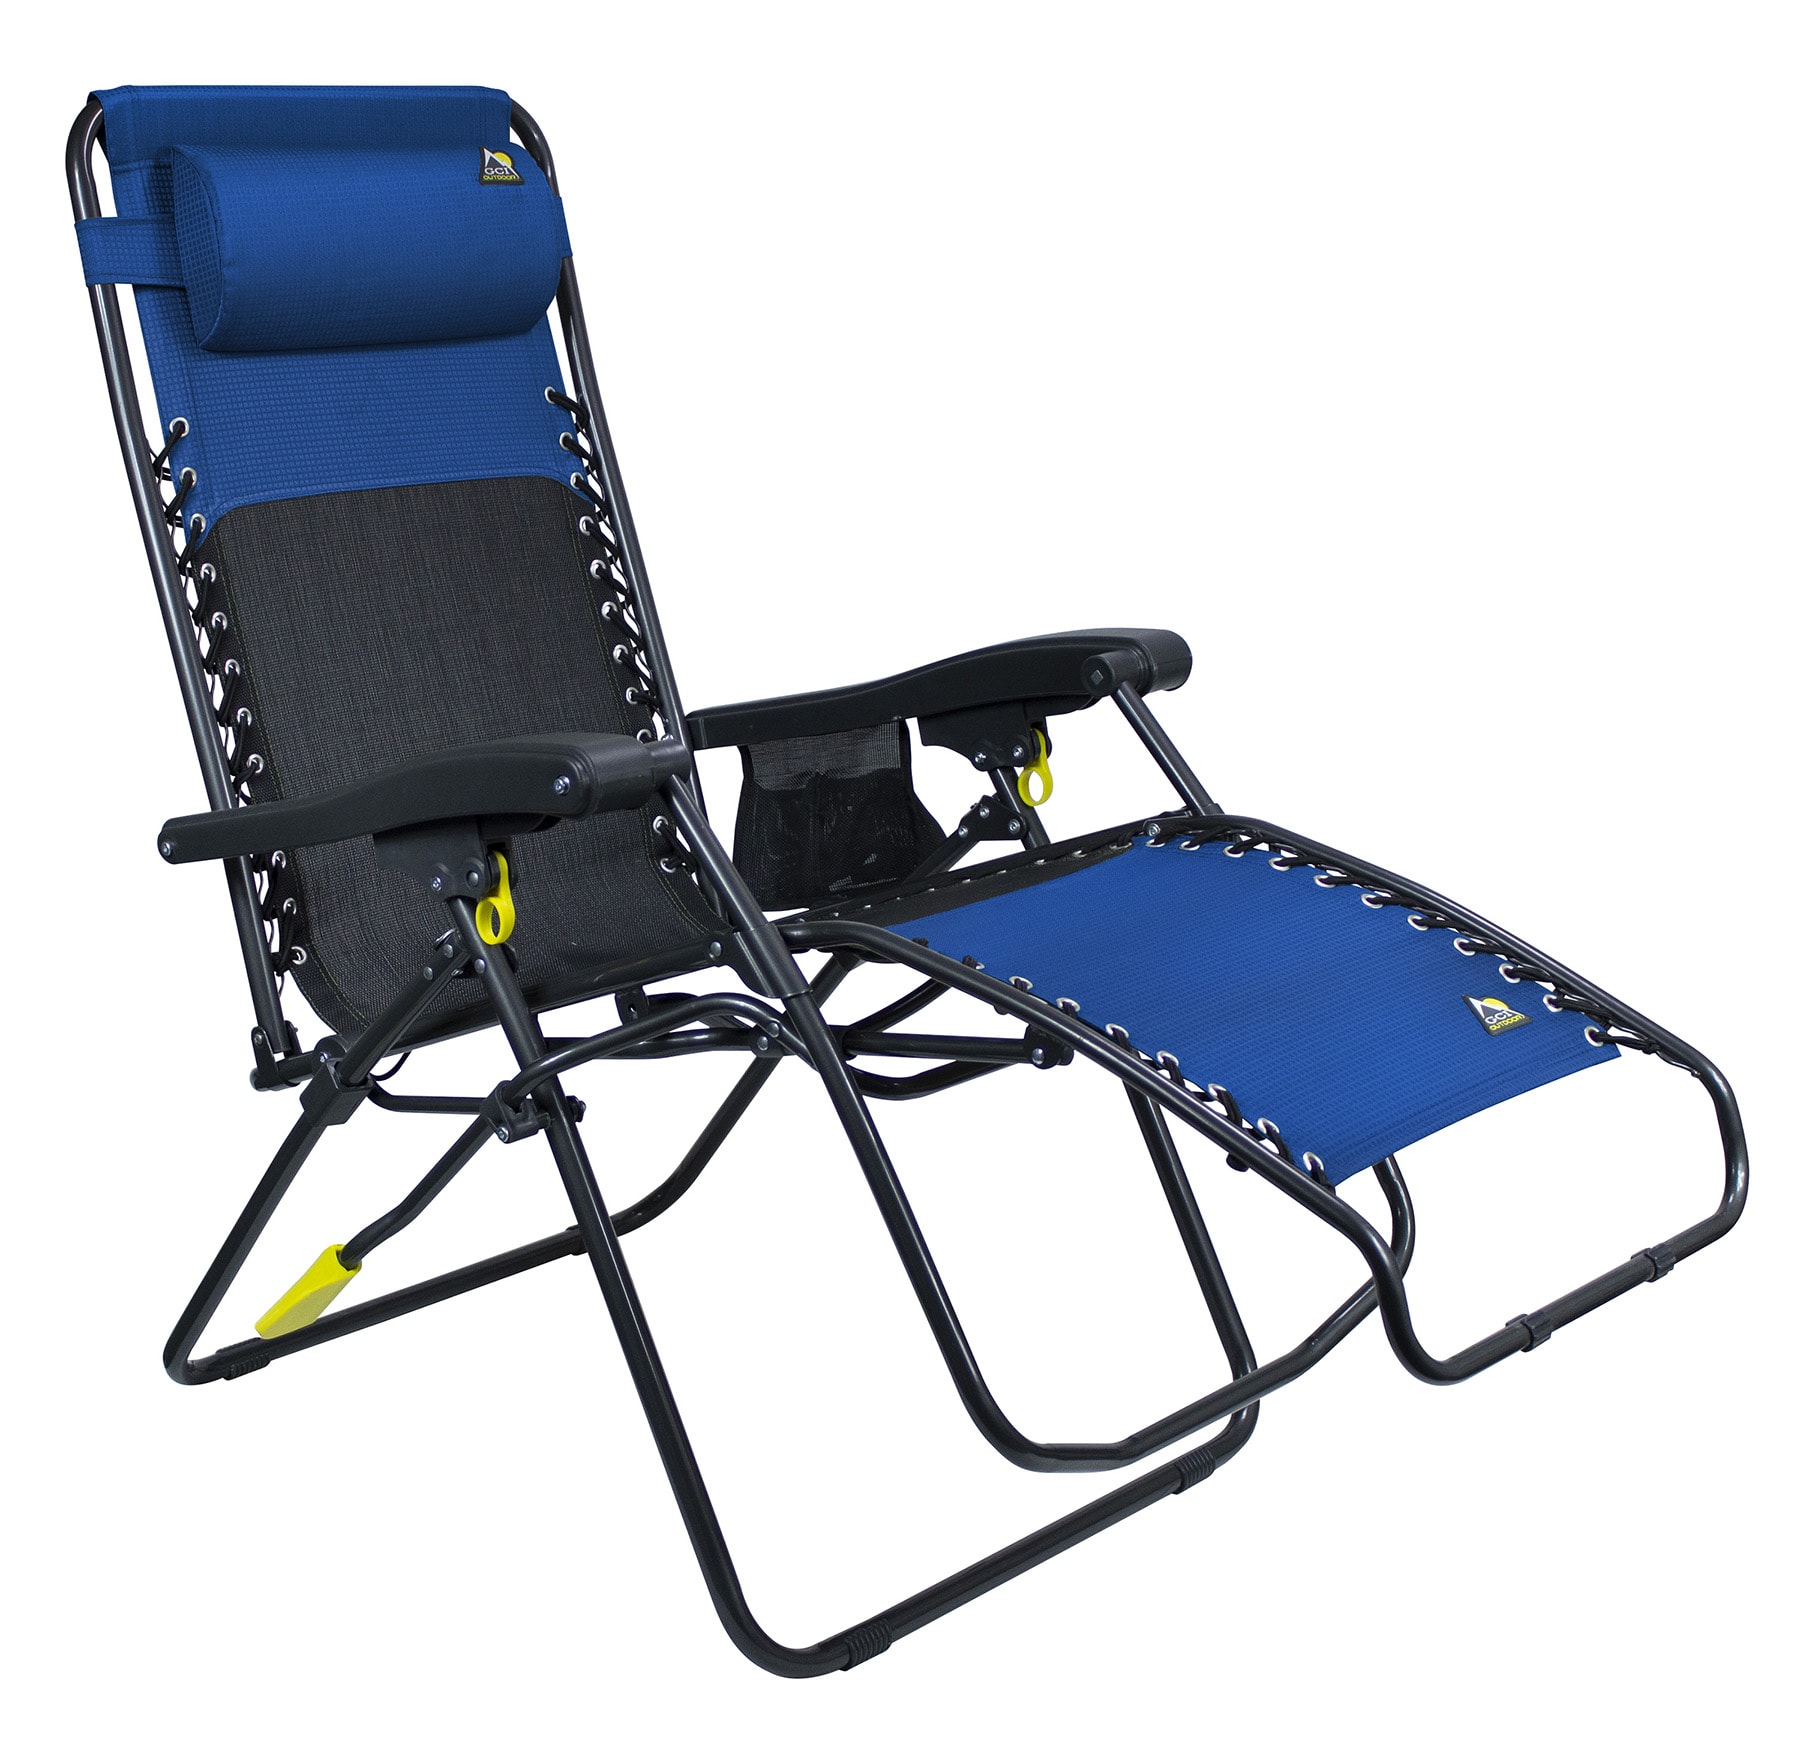 https://www.leacockcolemancenter.com/Chair---Freeform-Zero-Gravity-Lounger---Royal/image/item/80519